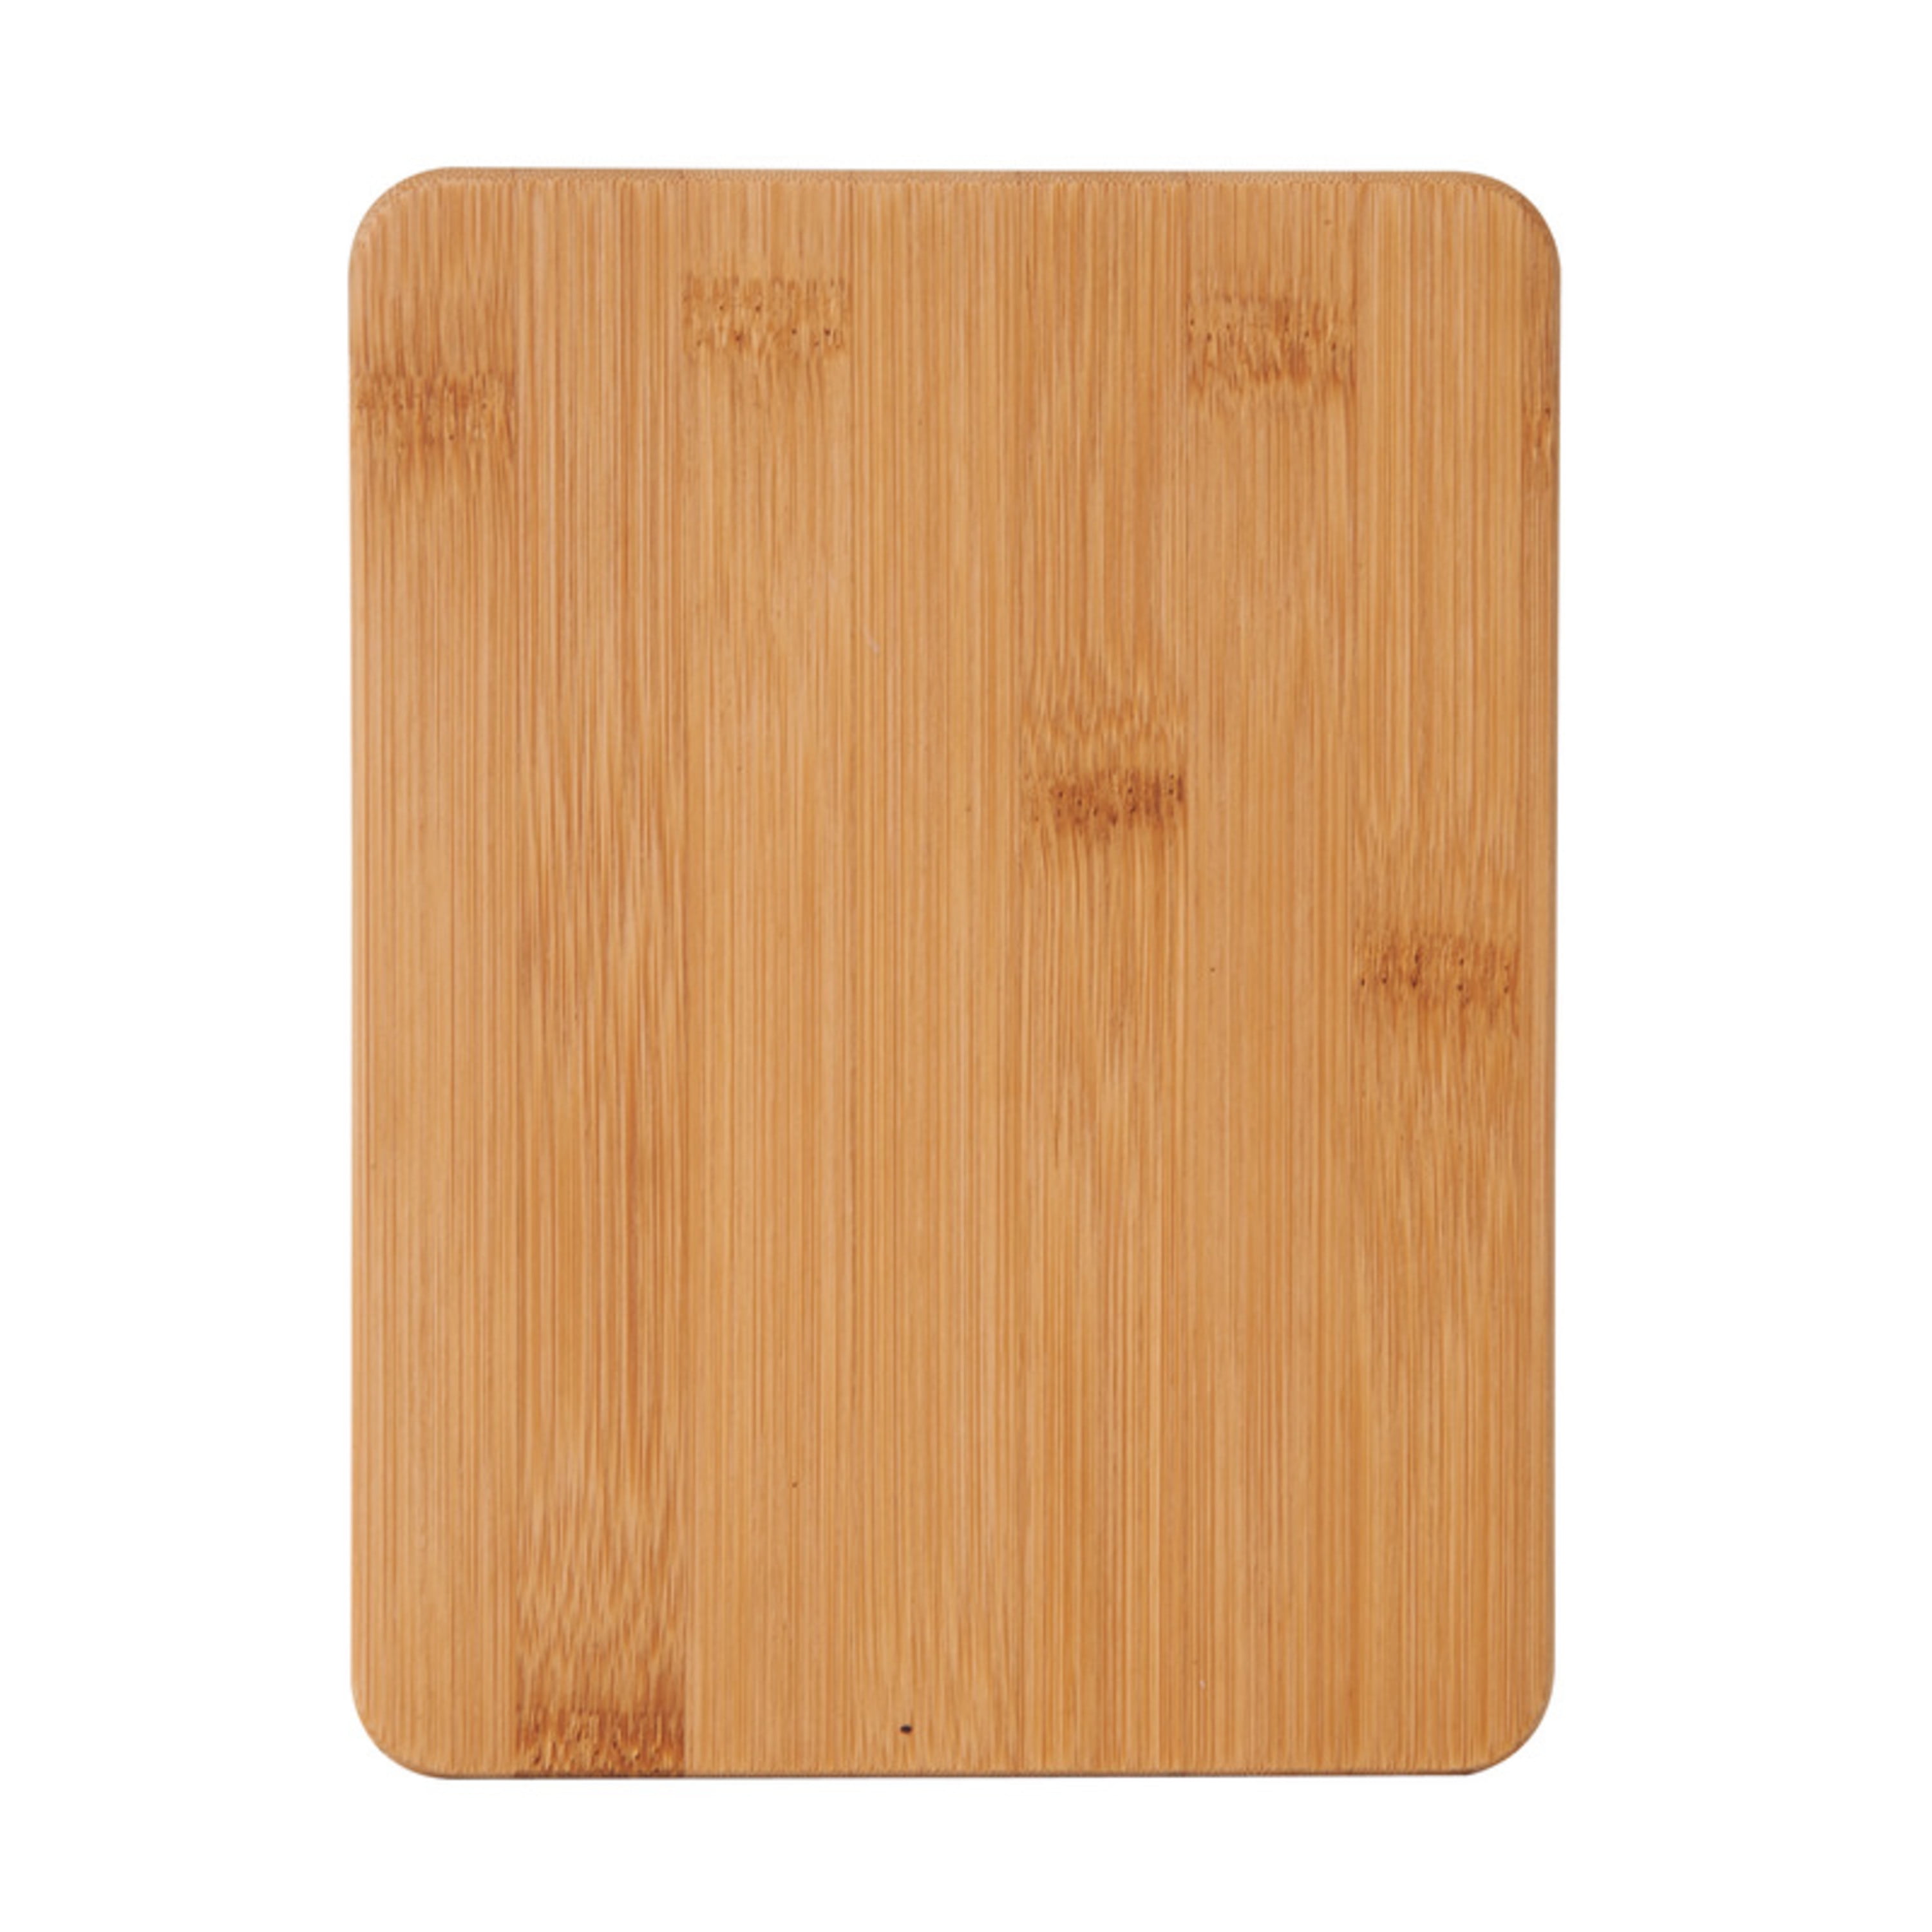 Farberware 5190597 3-Piece Bamboo Cutting Board Set Assorted Sizes